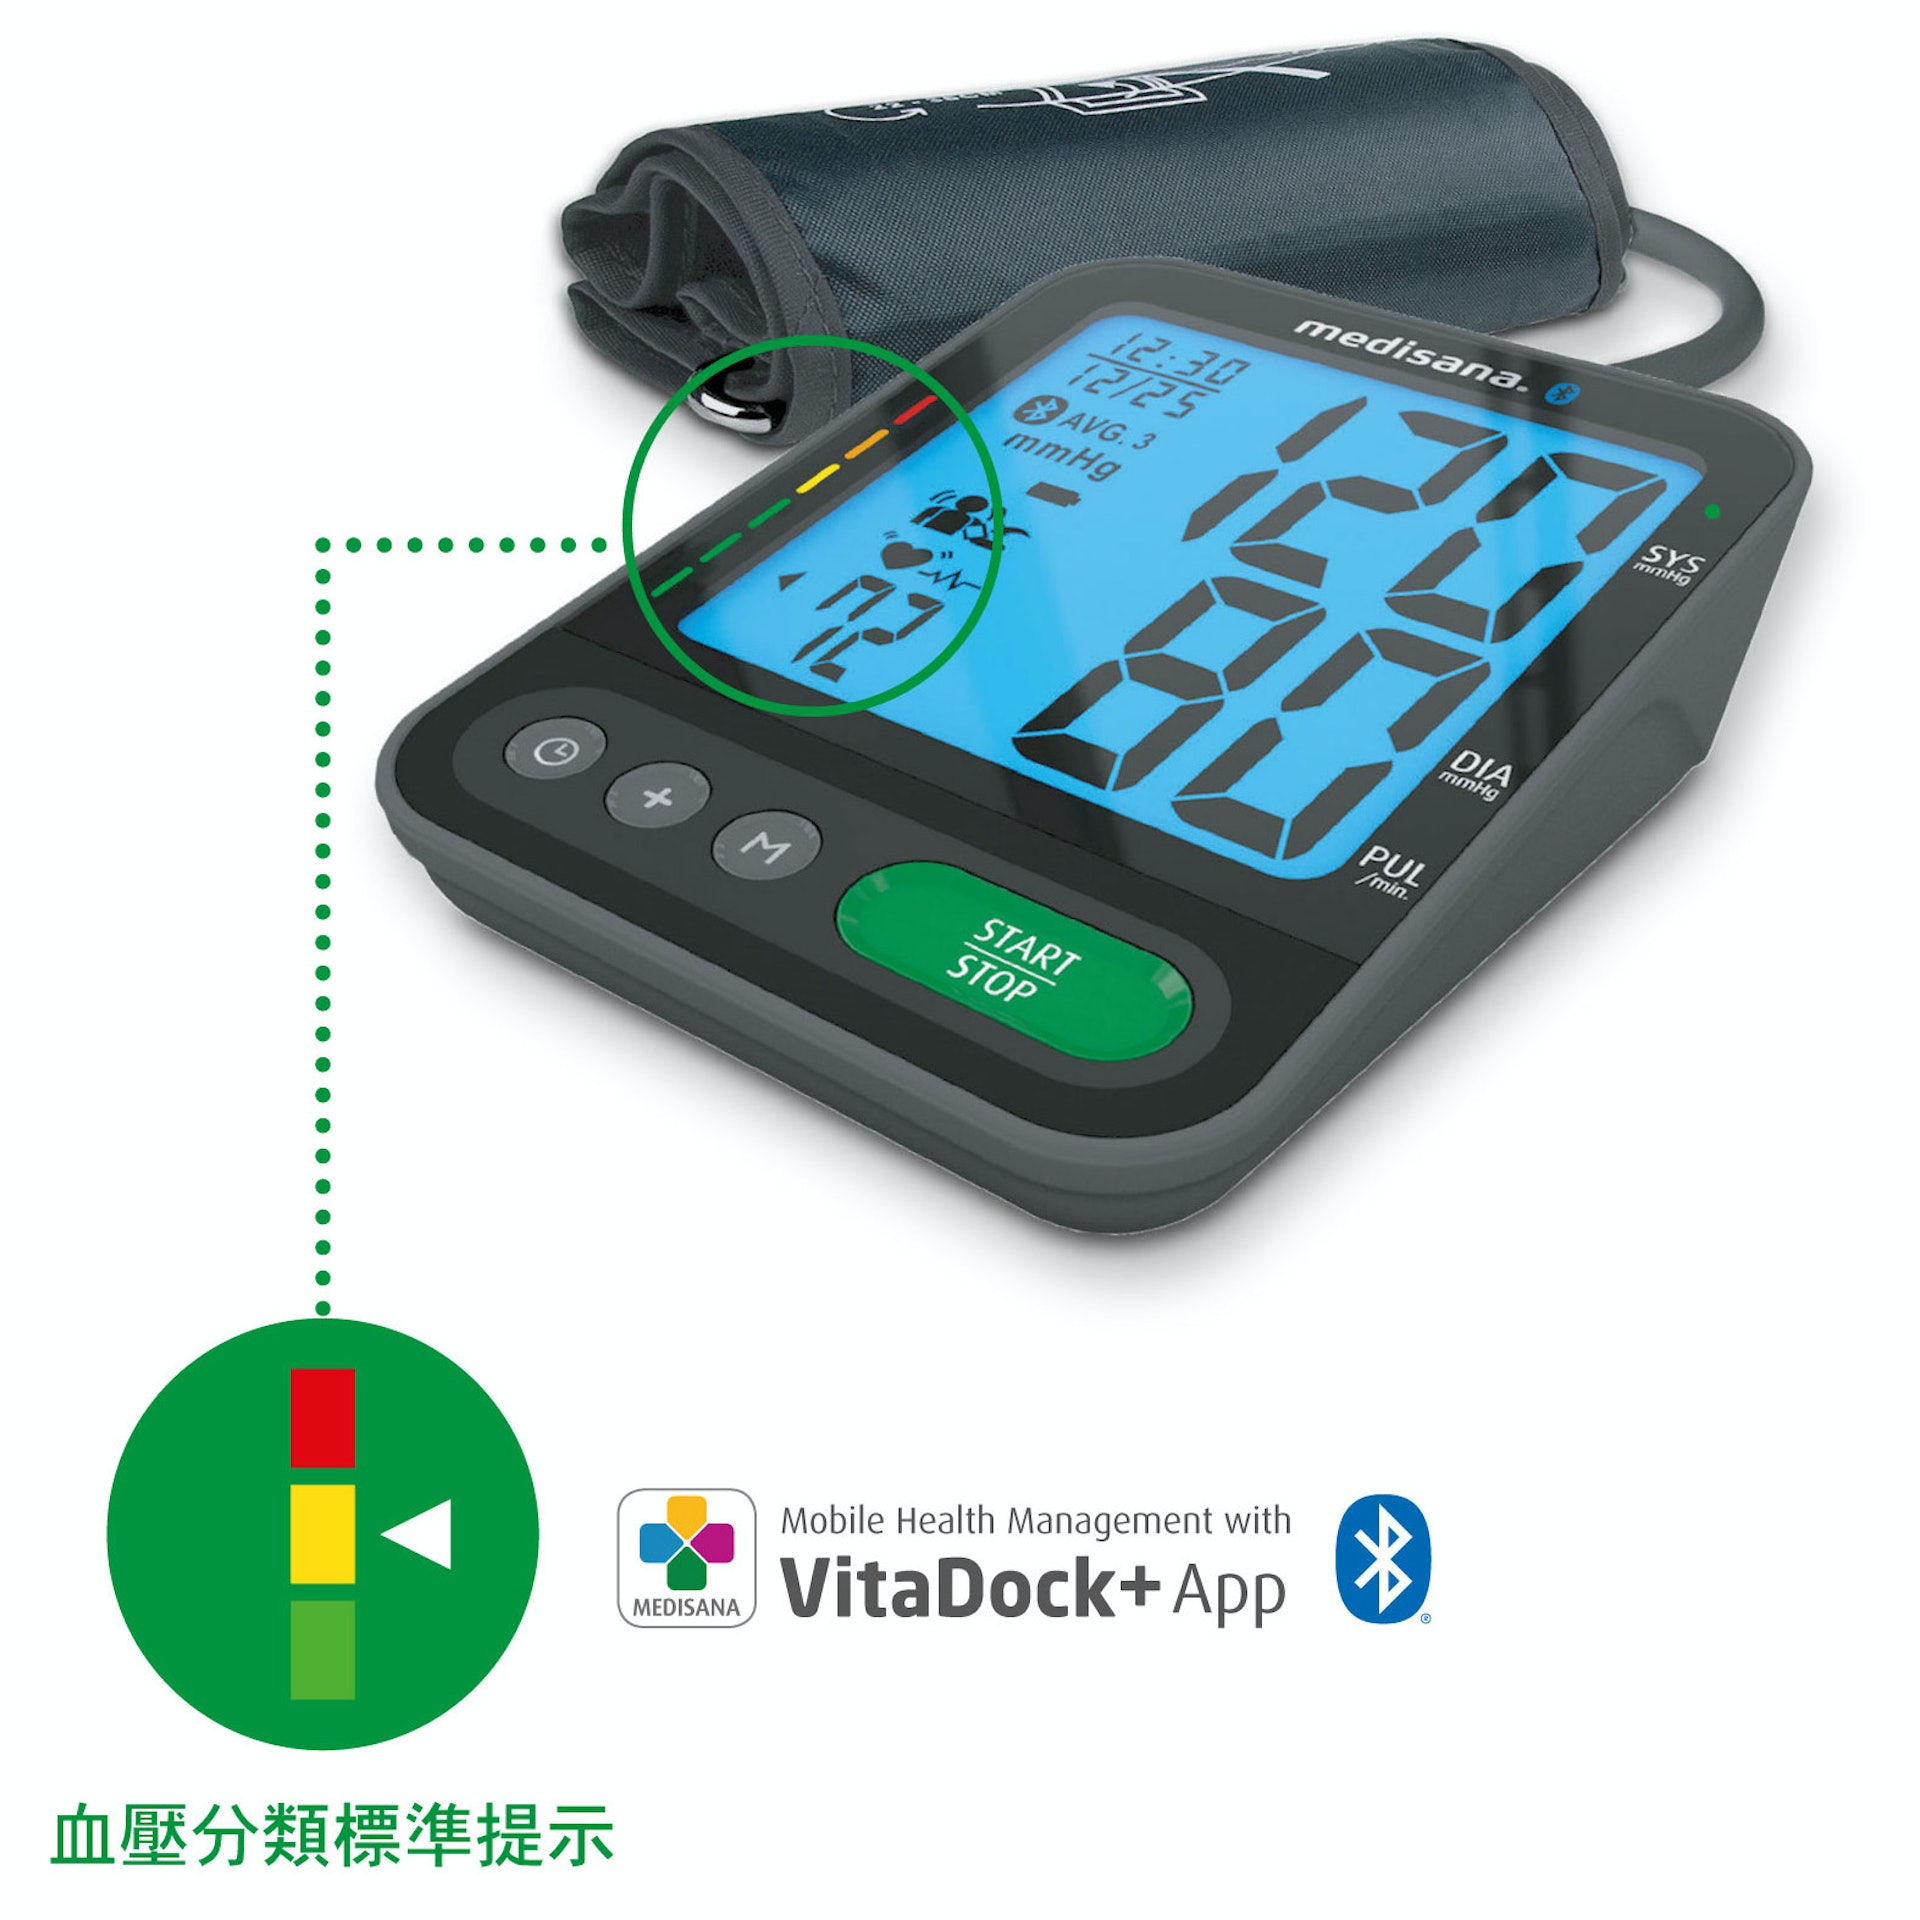 BU 580 connect上臂式電子血壓計設血壓分類準提示，以紅、黃、綠色標示不同血壓水平，以提示用家。